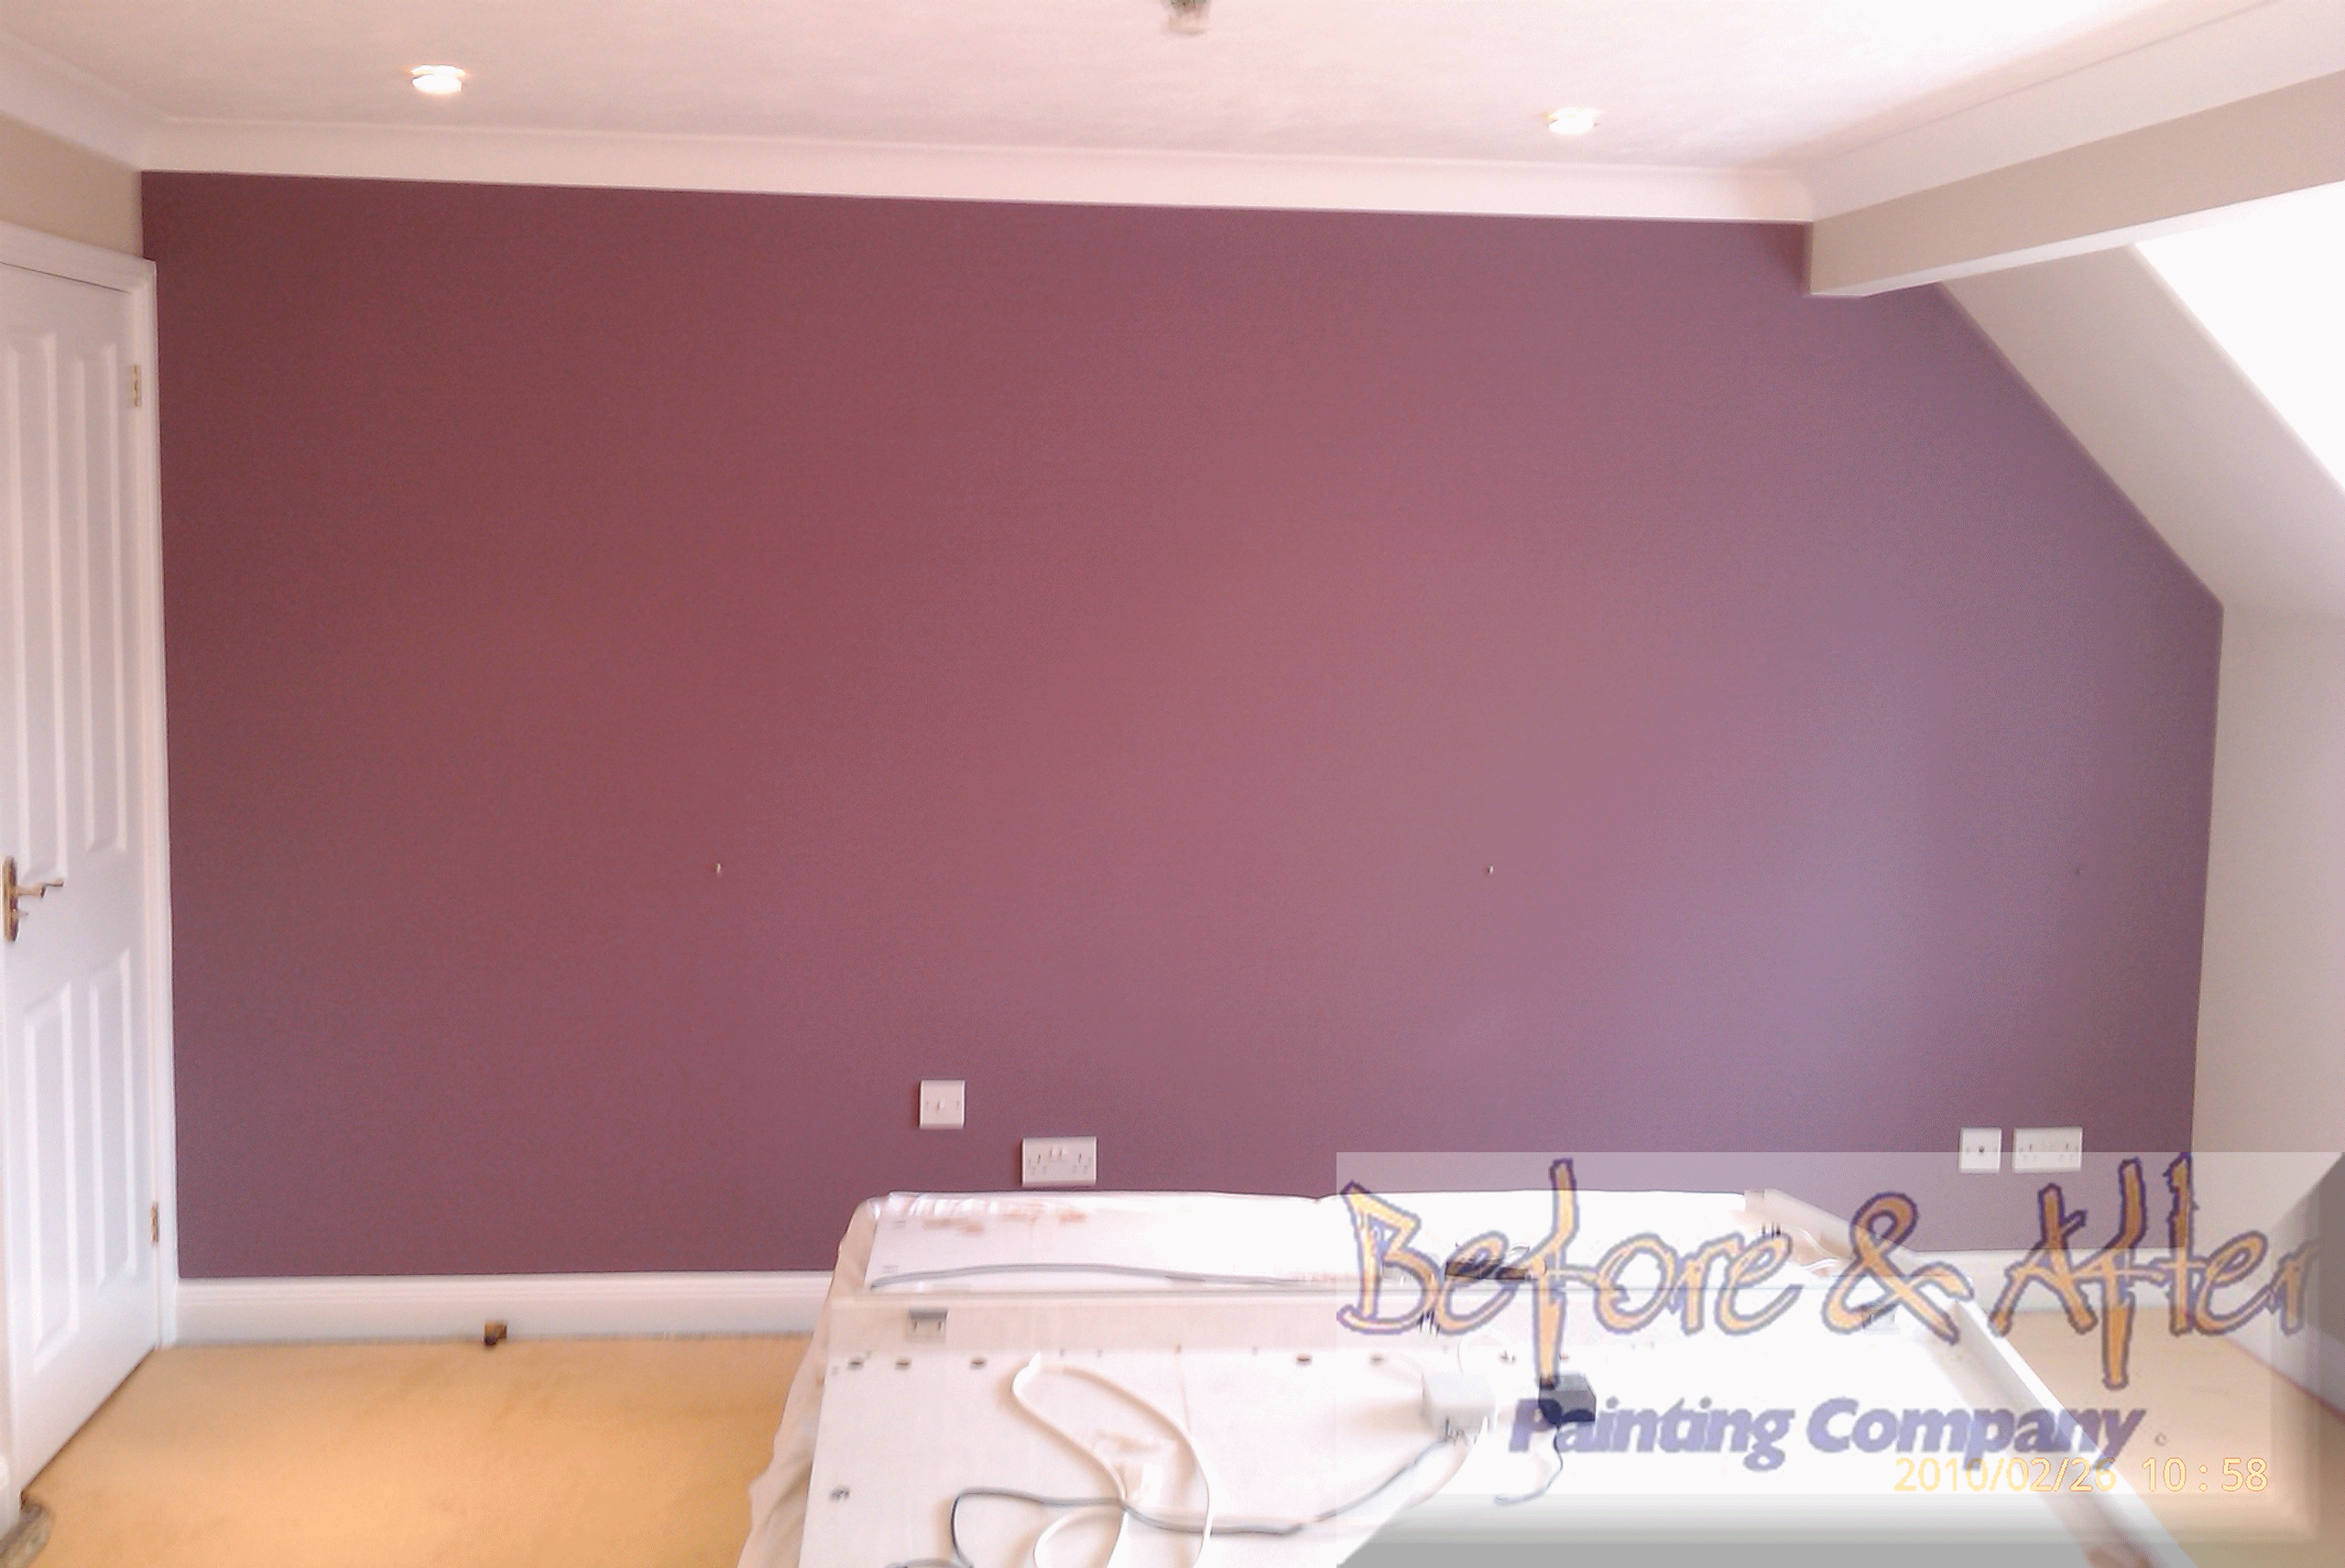 A bold feature wall in Crown Trade matt vinyl emulsion - Armagnac